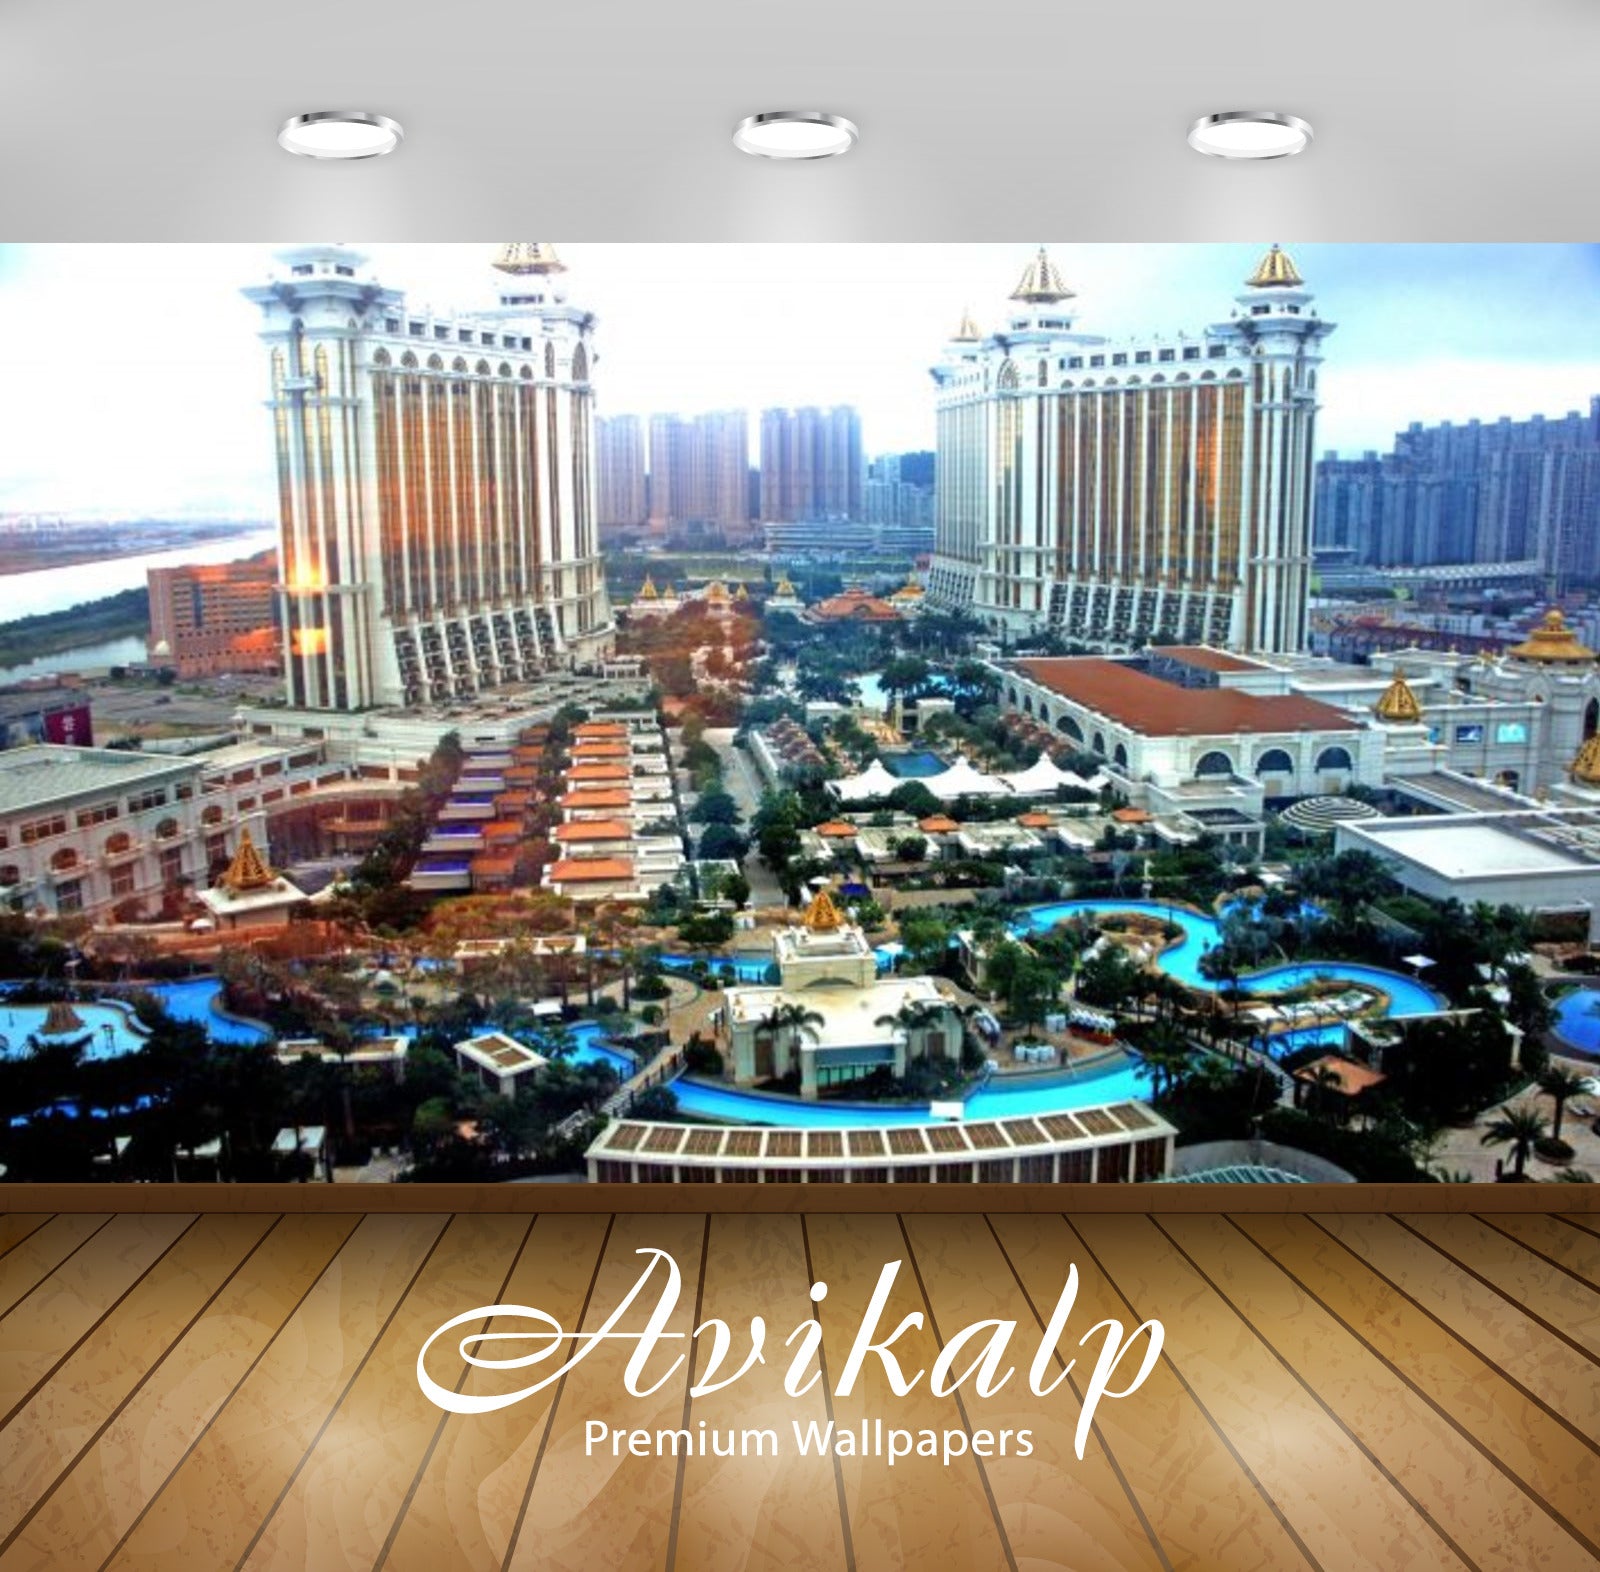 Avikalp Exclusive Awi2659 Galaxy Macau Resort In The Cotai Strip Macau China Full HD Wallpapers for